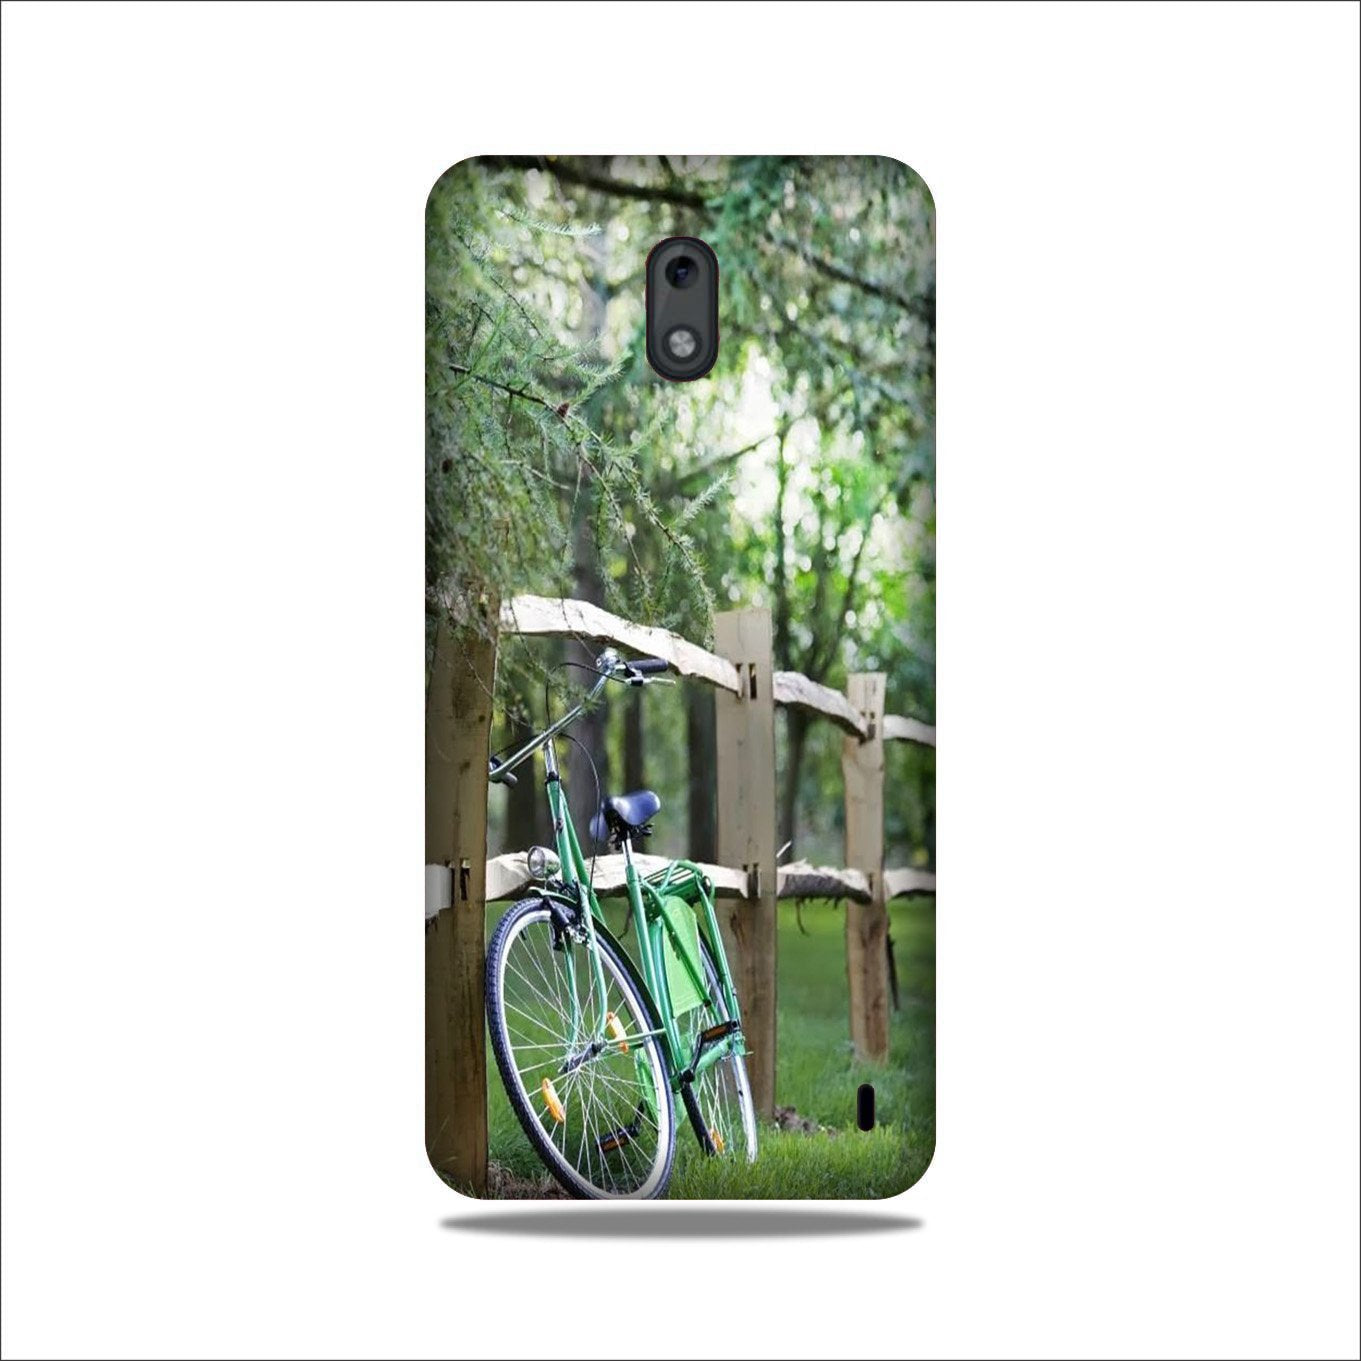 Bicycle Case for Nokia 2.2 (Design No. 208)